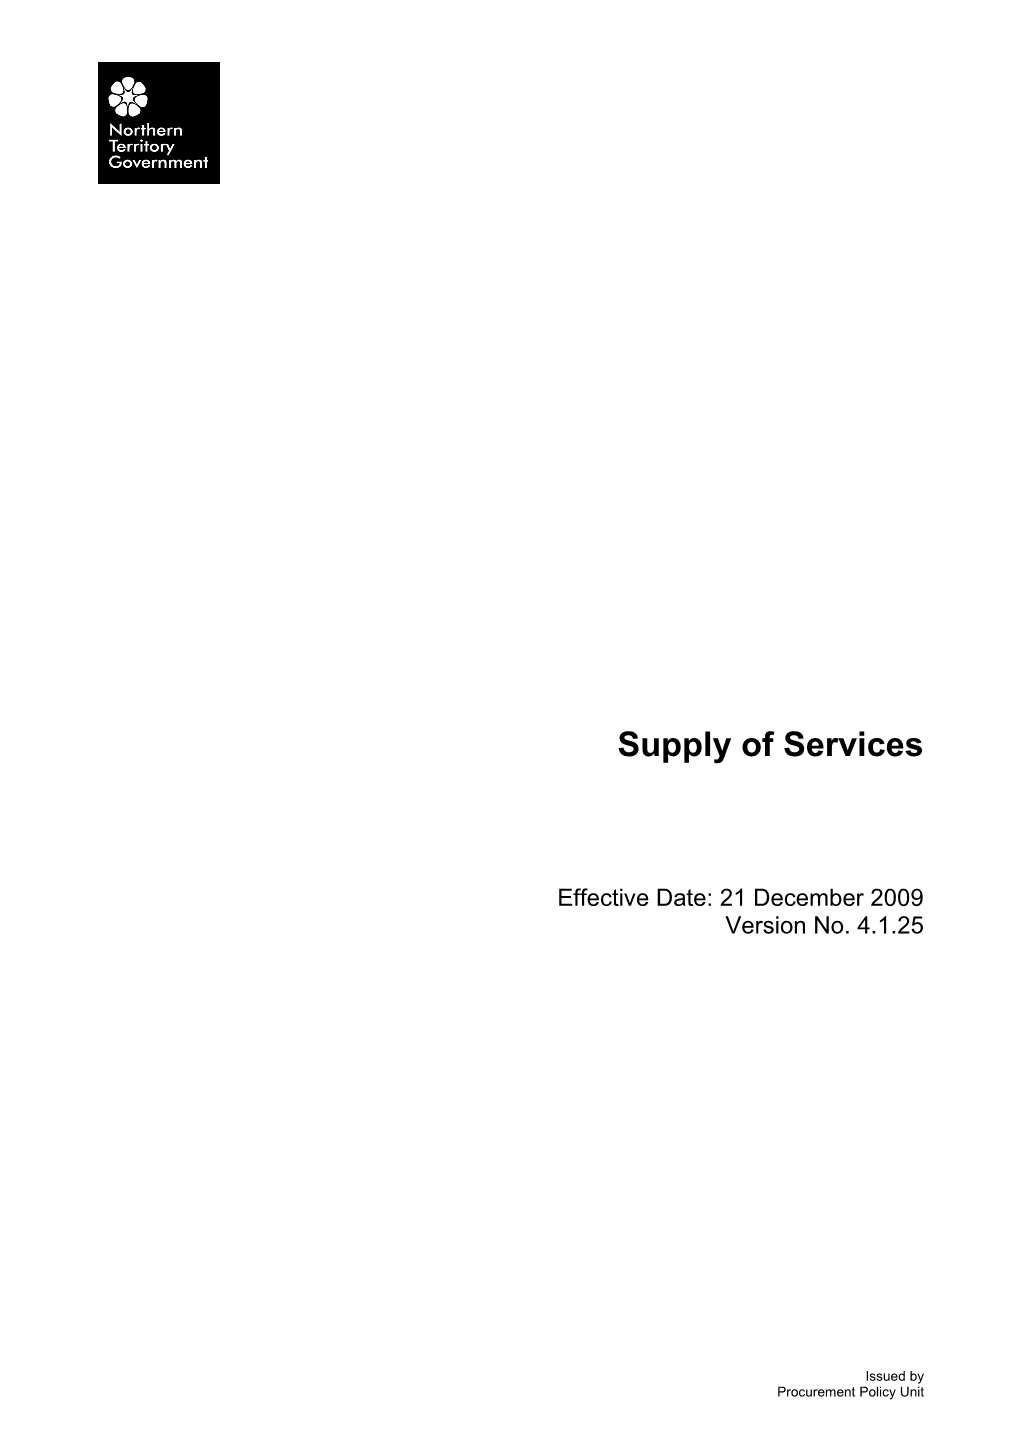 Supply of Services - V 4.1.25 (21 December 2009)